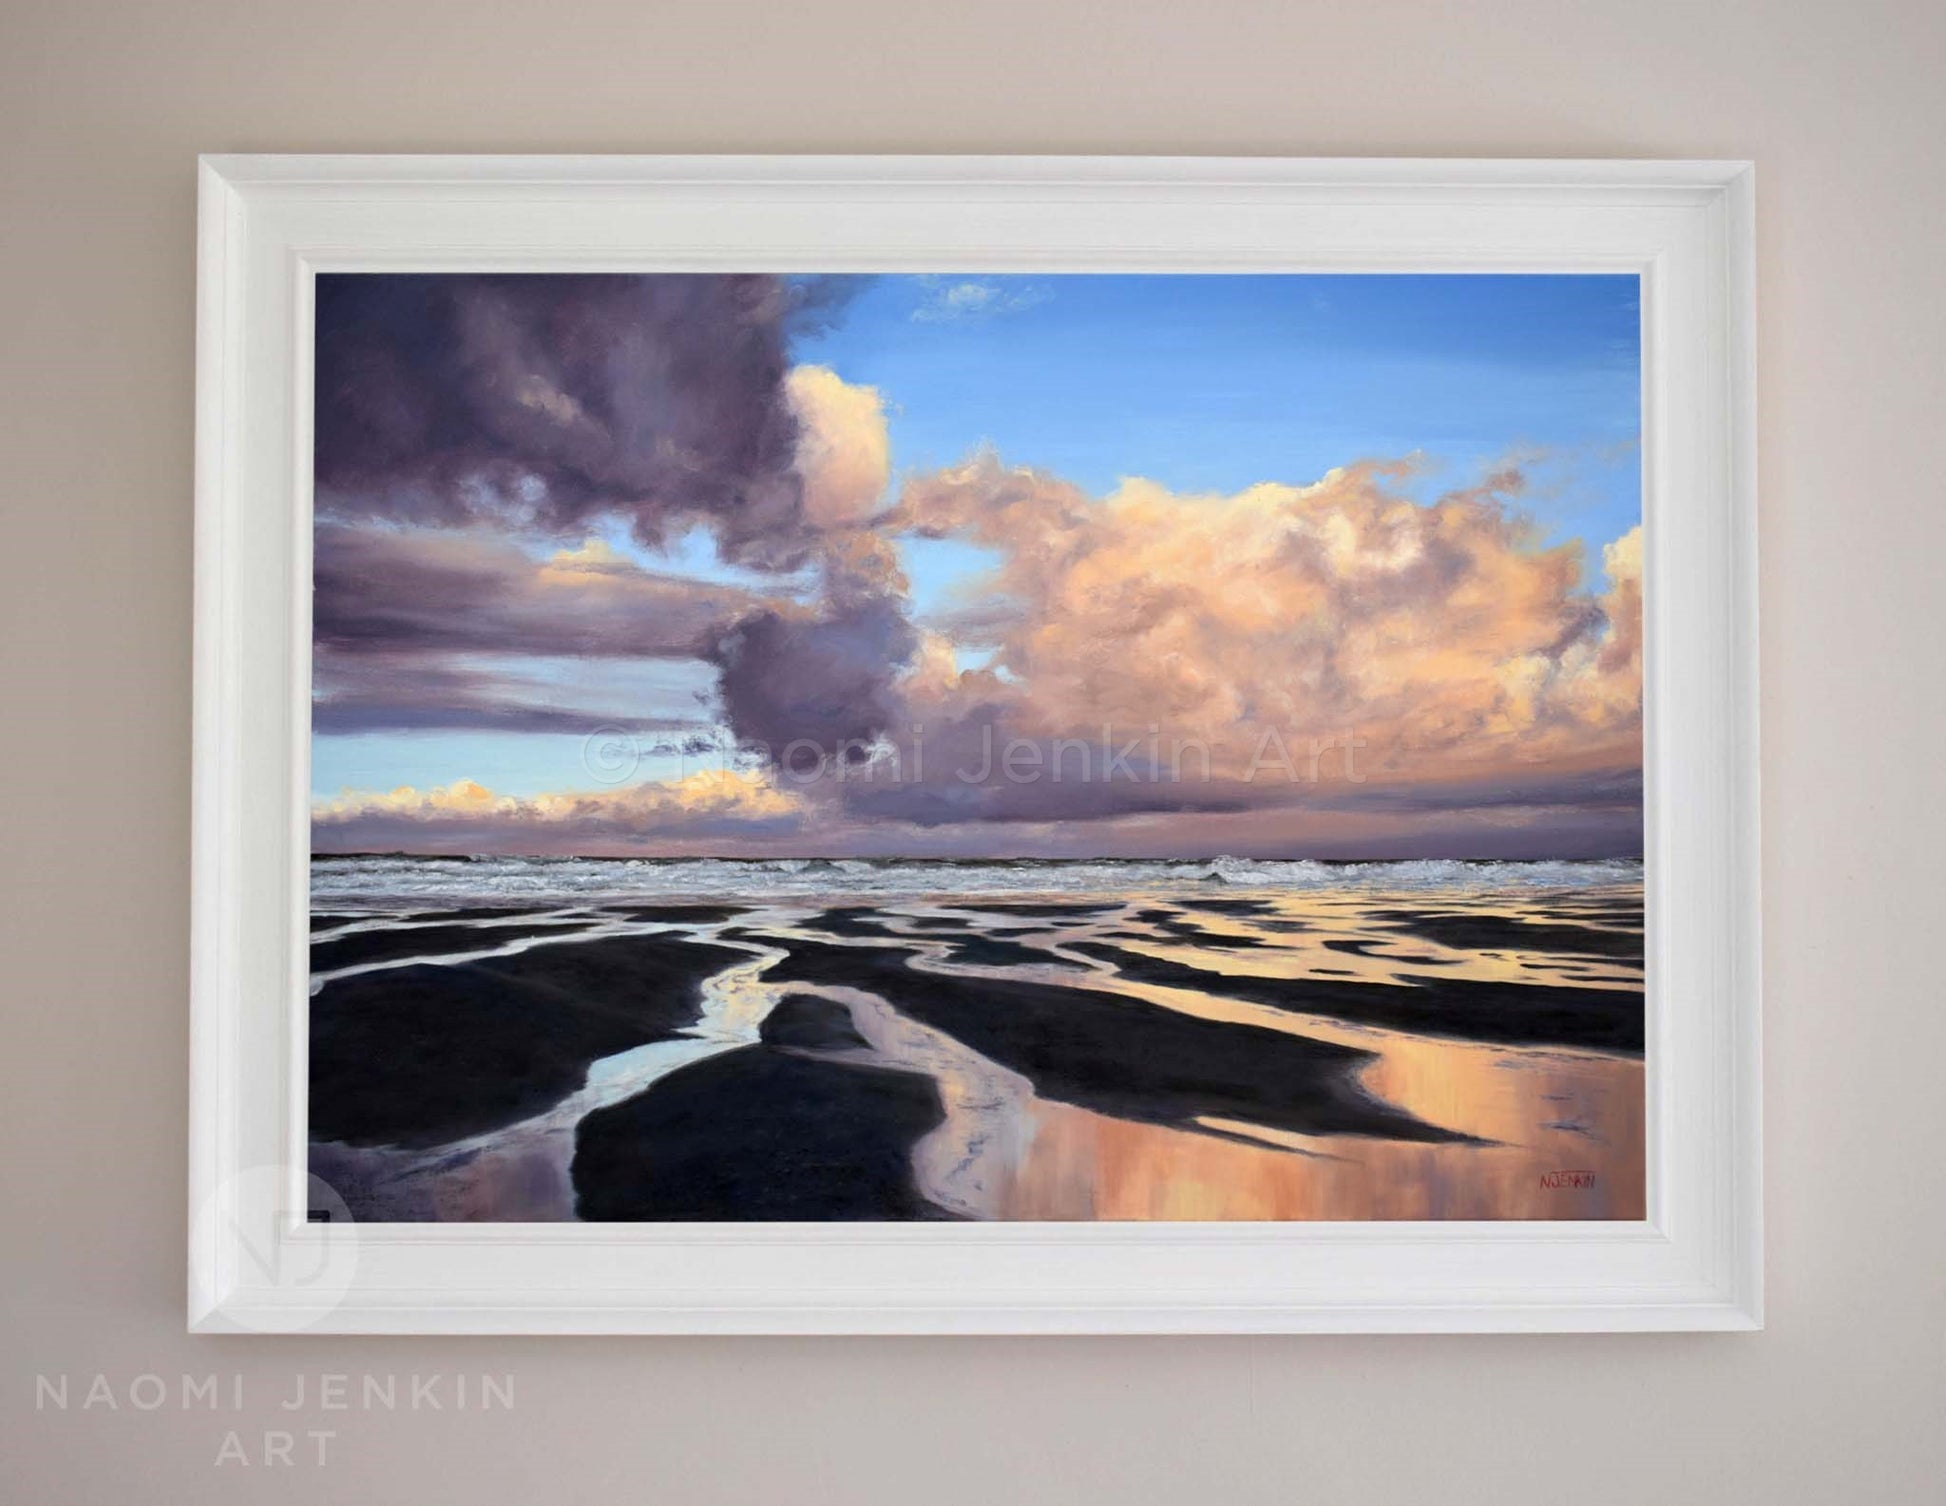 Framed seascape painting by Naomi Jenkin Art. 